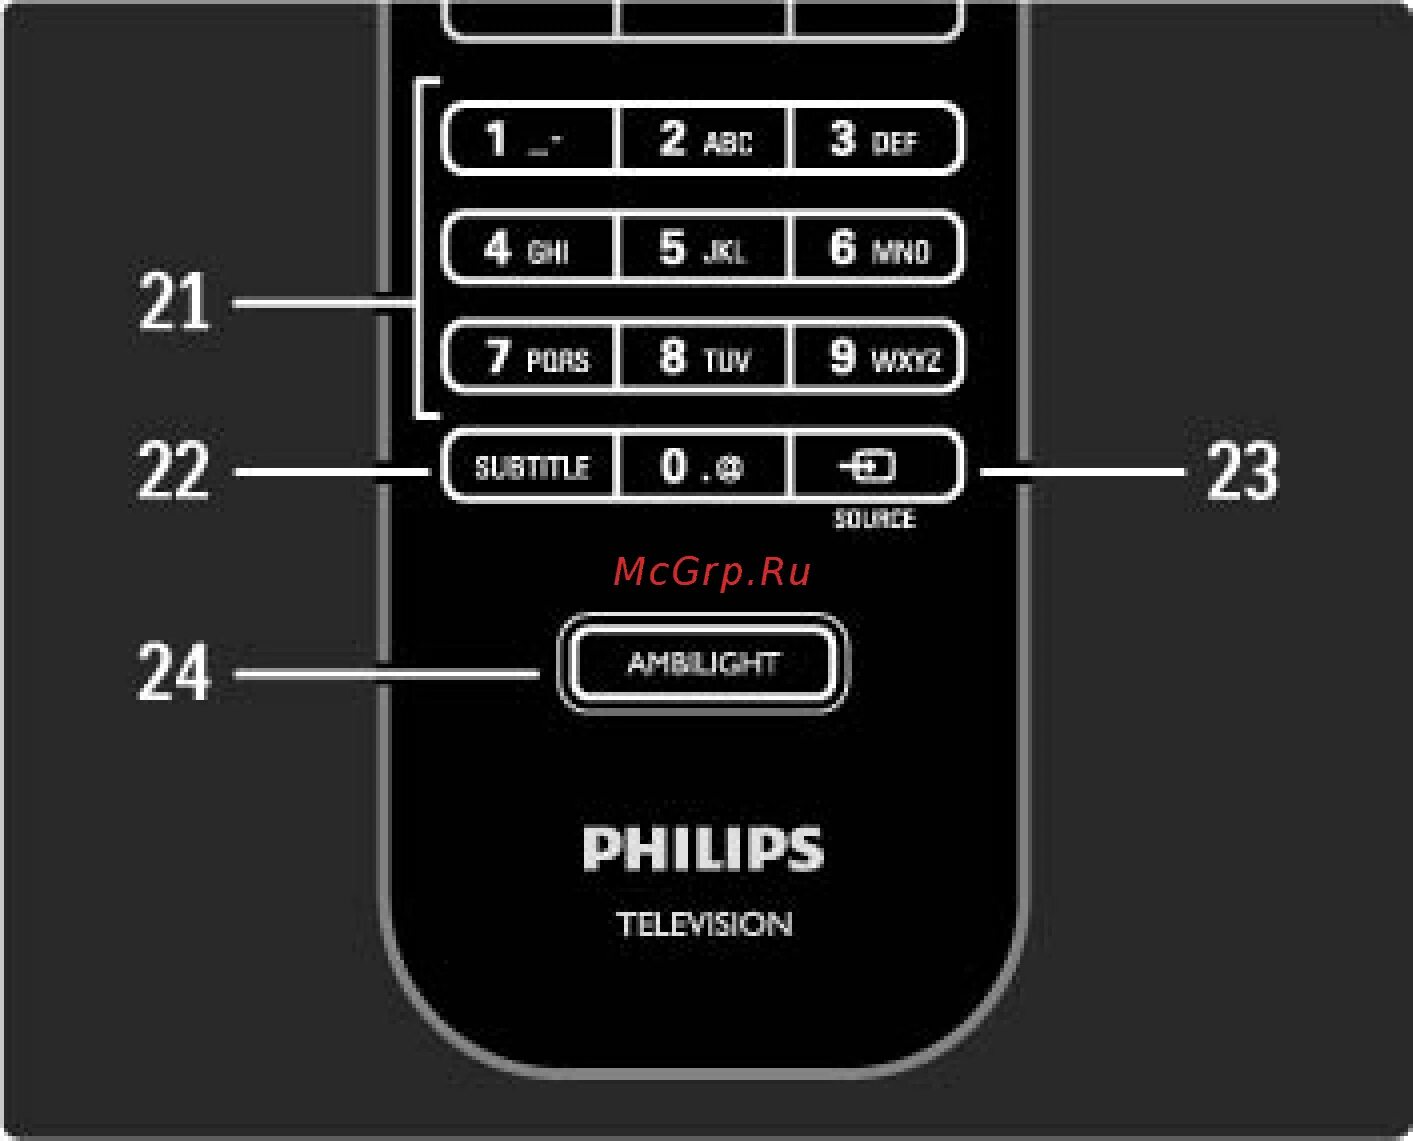 Кнопка соурс. Кнопка Ambilight на пульте Филипс. Philips 56pfl9954h. Кнопки управления на телевизоре Филипс. Кнопка source на пульте Филипс.